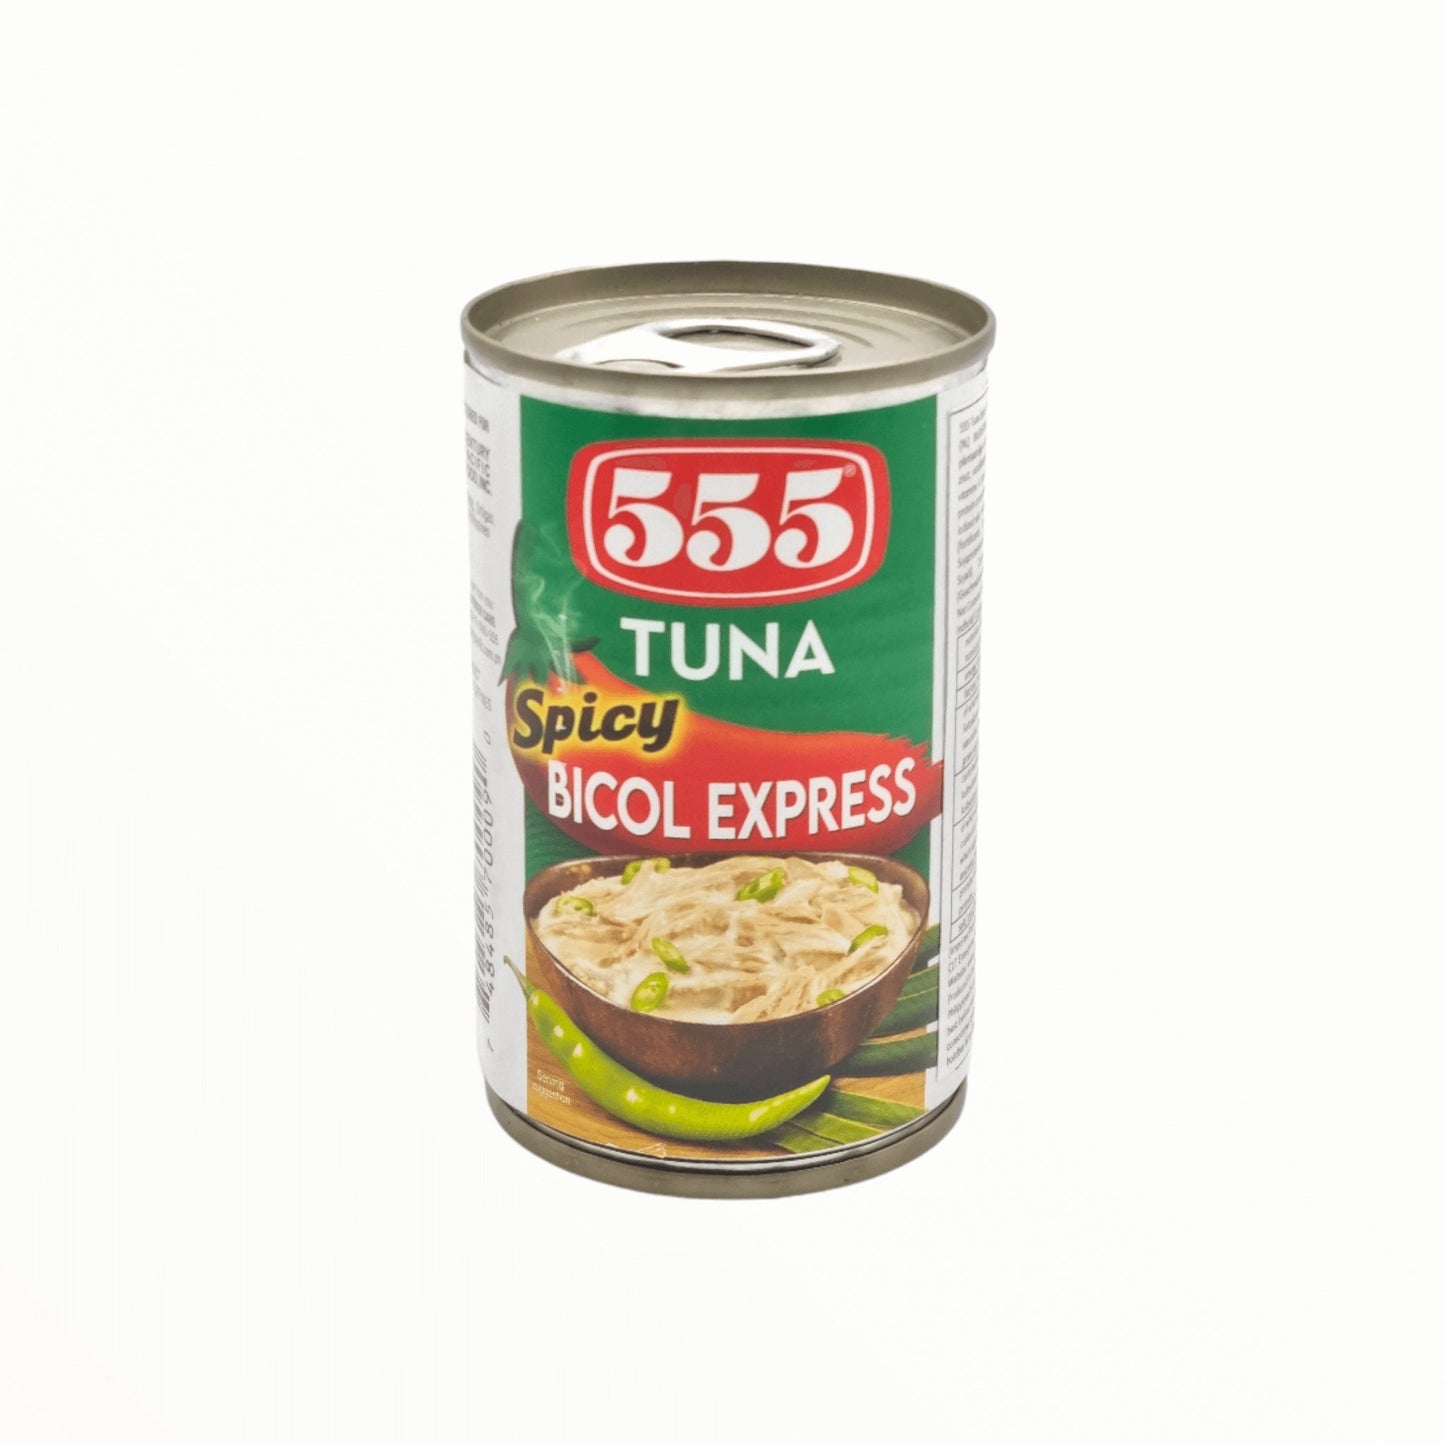 Tuna Bicol Express Spicy 155g - Mabuhay Pinoy Asia Shop